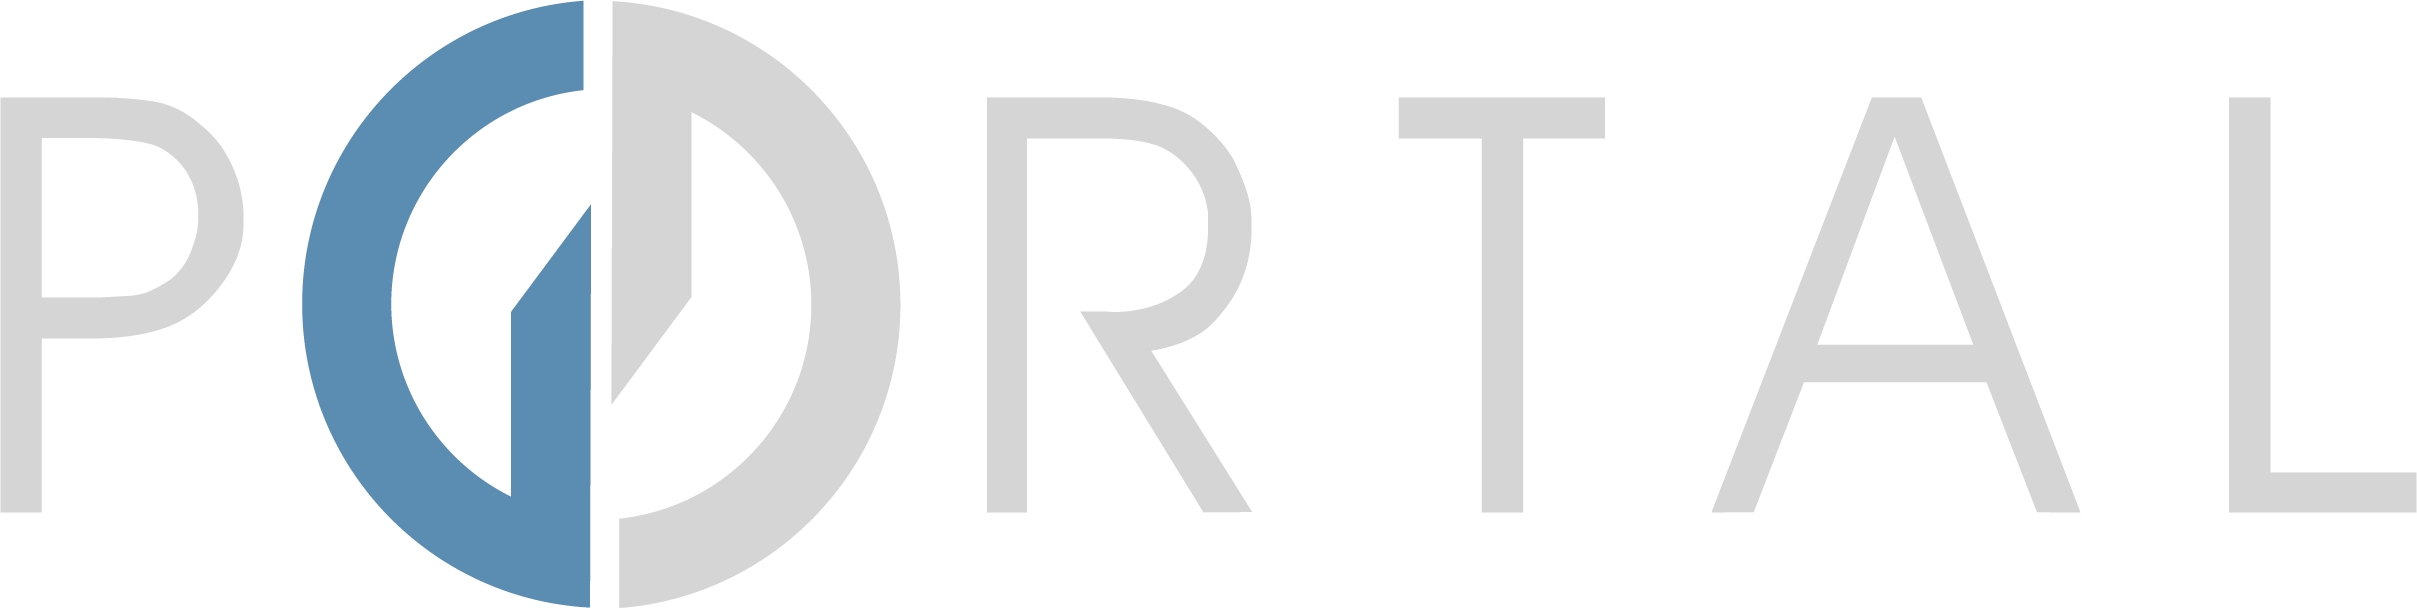 Gray Dawes PORTAL logo